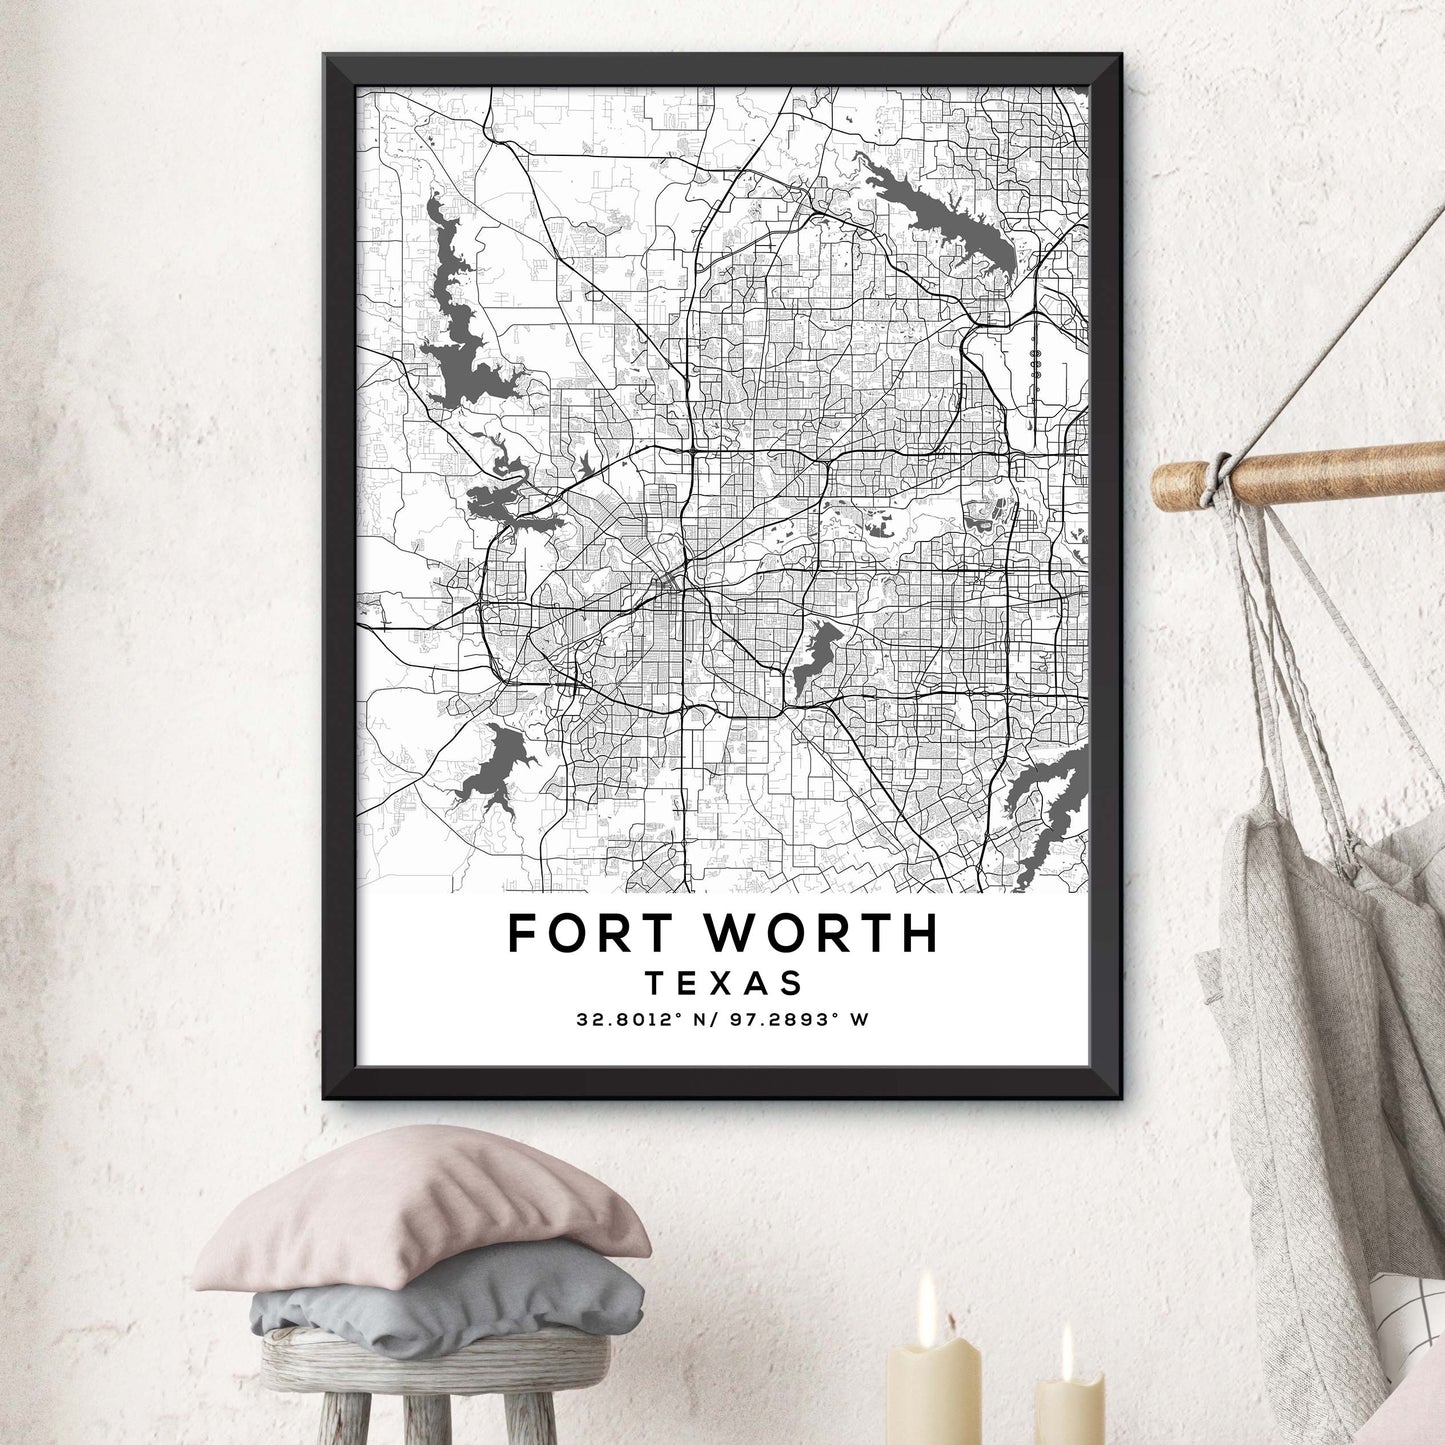 Fort-Worth,Texas Map Print